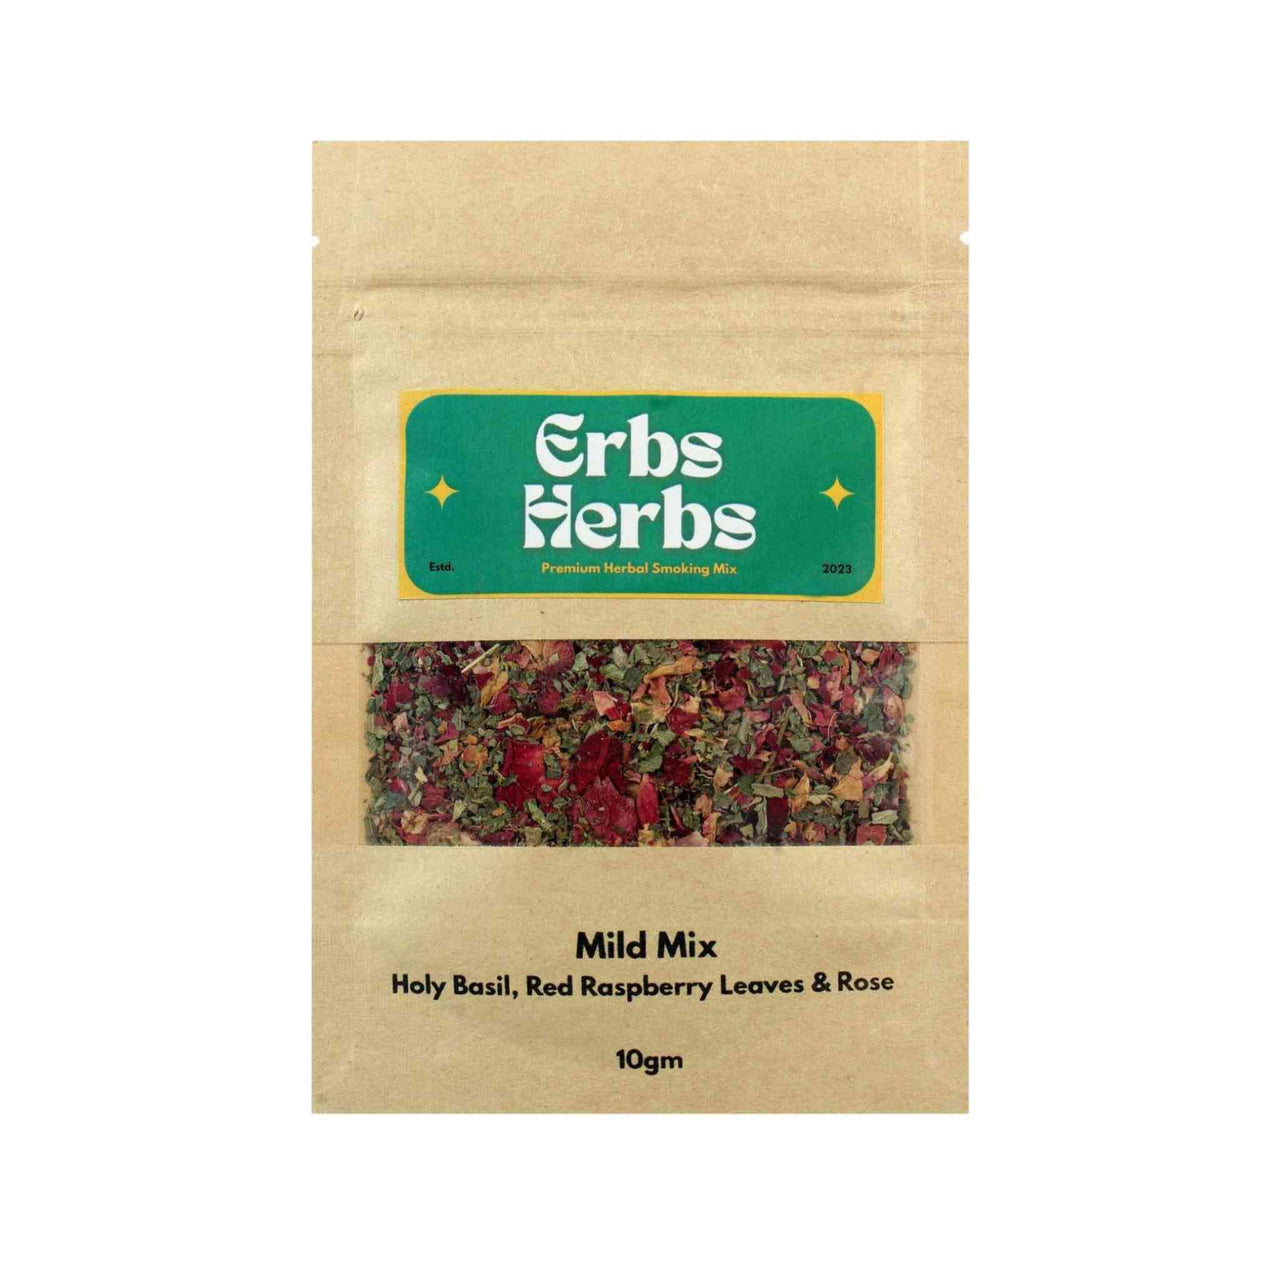 ErbsHerbs - Mild Mix Pack of 1